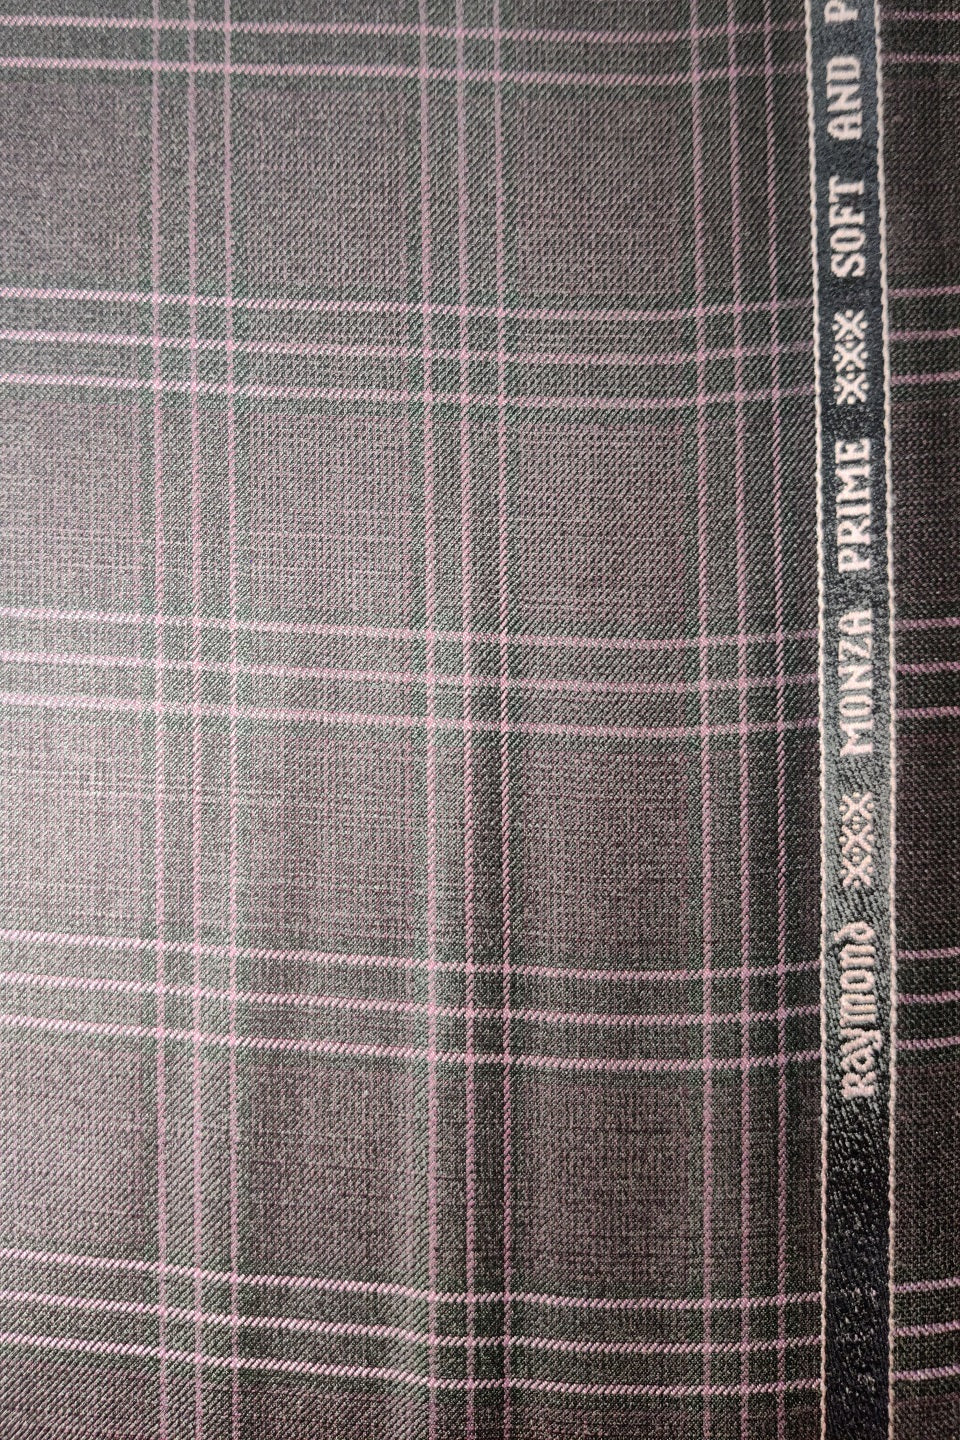 PV Wool (by Raymonds Mills) Checkered Brown Blazer